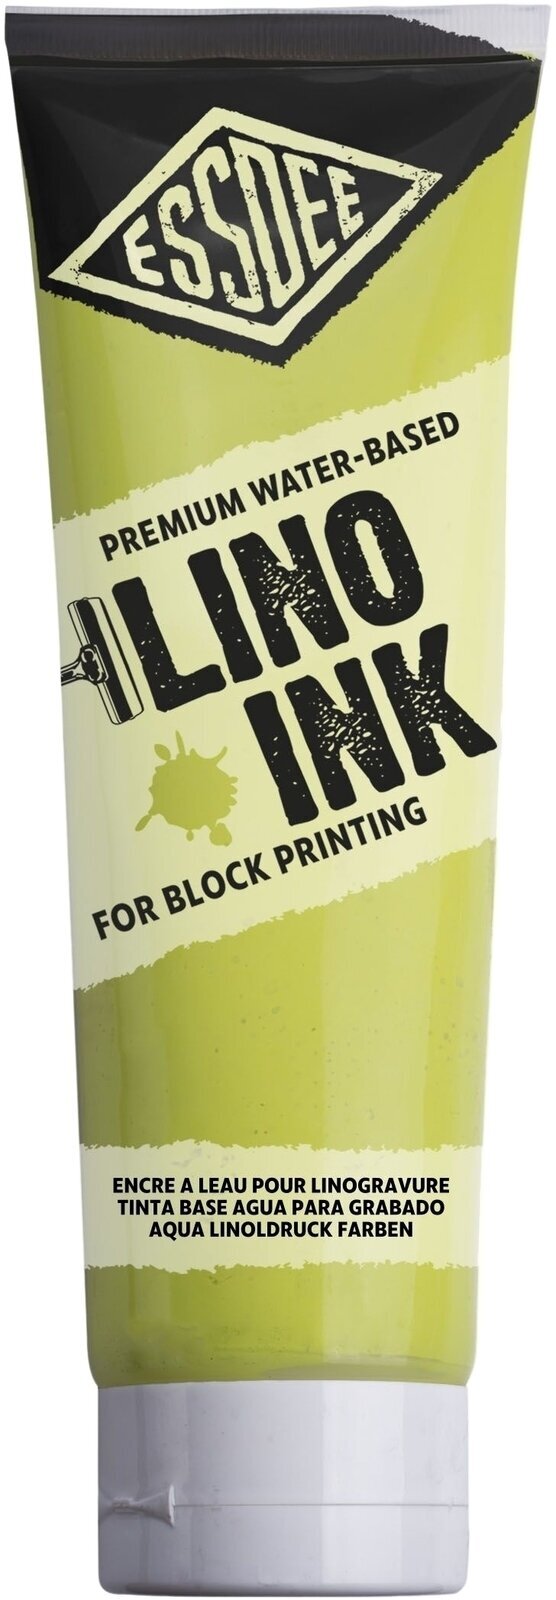 Paint For Linocut Essdee Block Printing Ink Paint For Linocut Fluorescent Yellow 300 ml